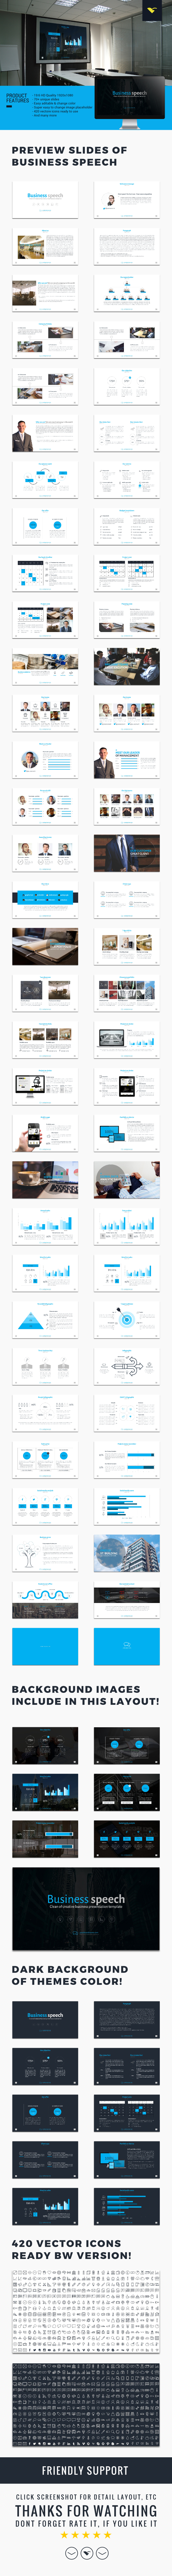 google slide business speech presentation blue business annual report Digital Report